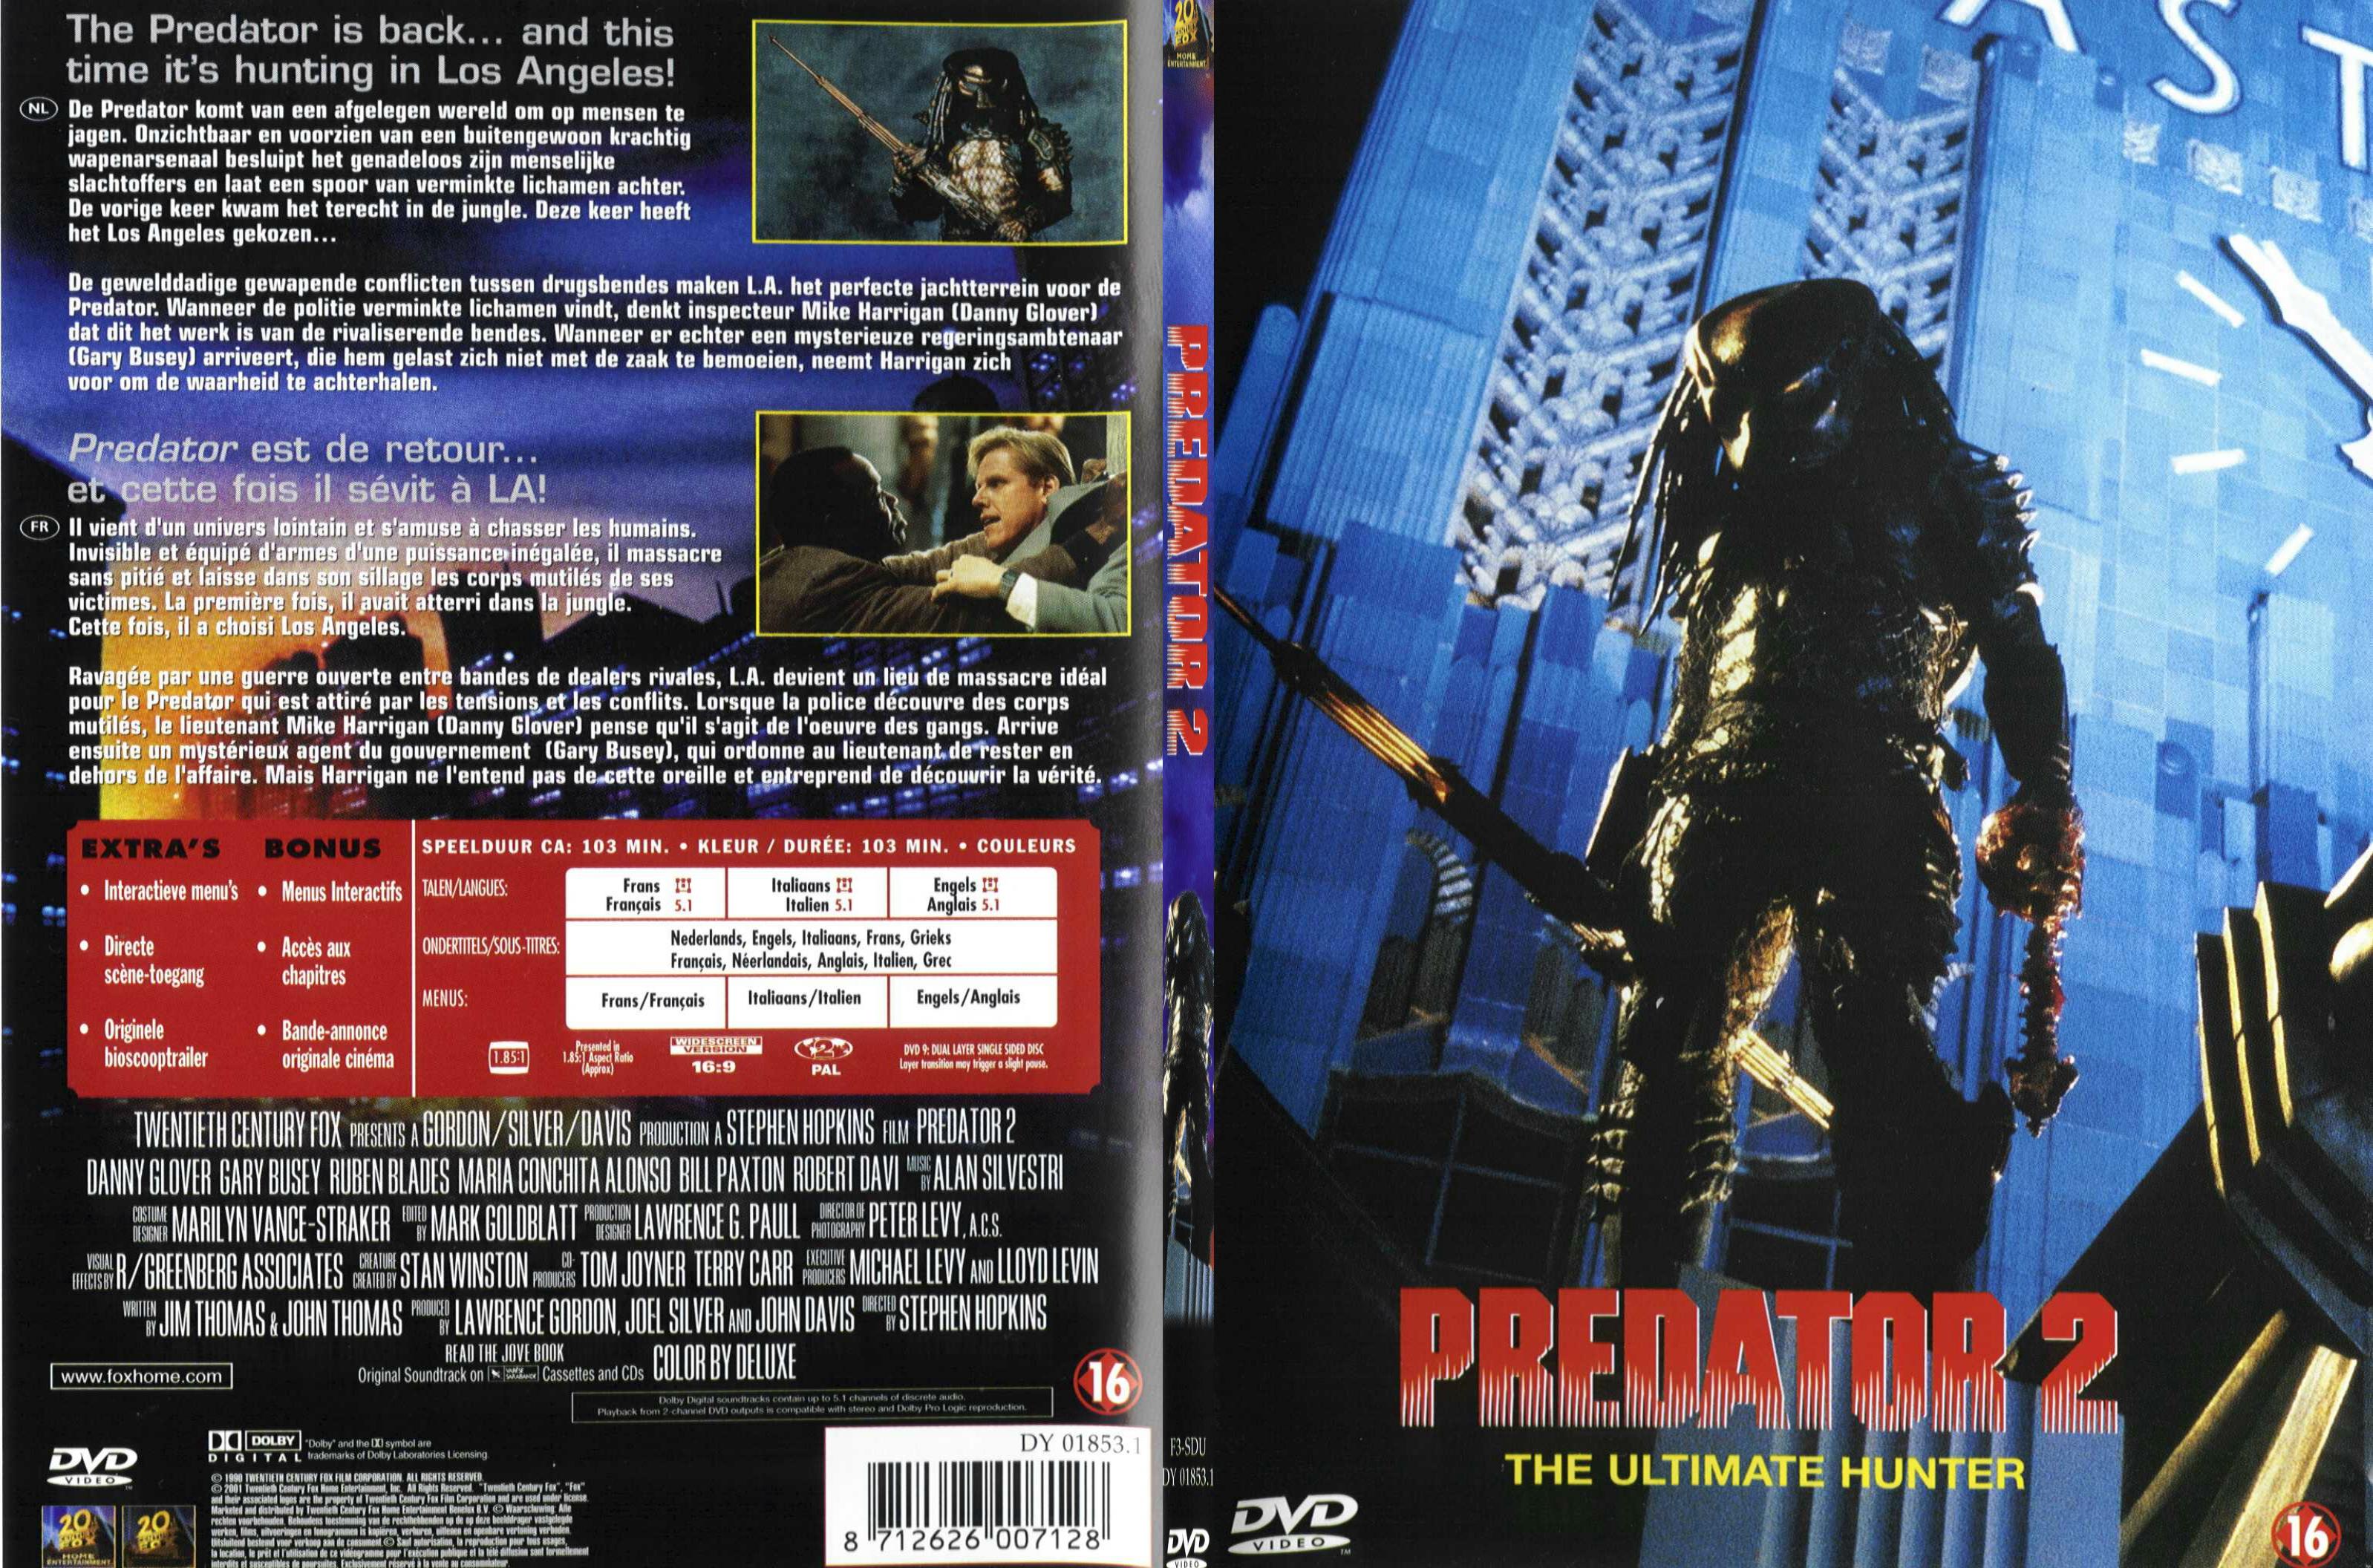 Jaquette DVD Predator 2 - SLIM